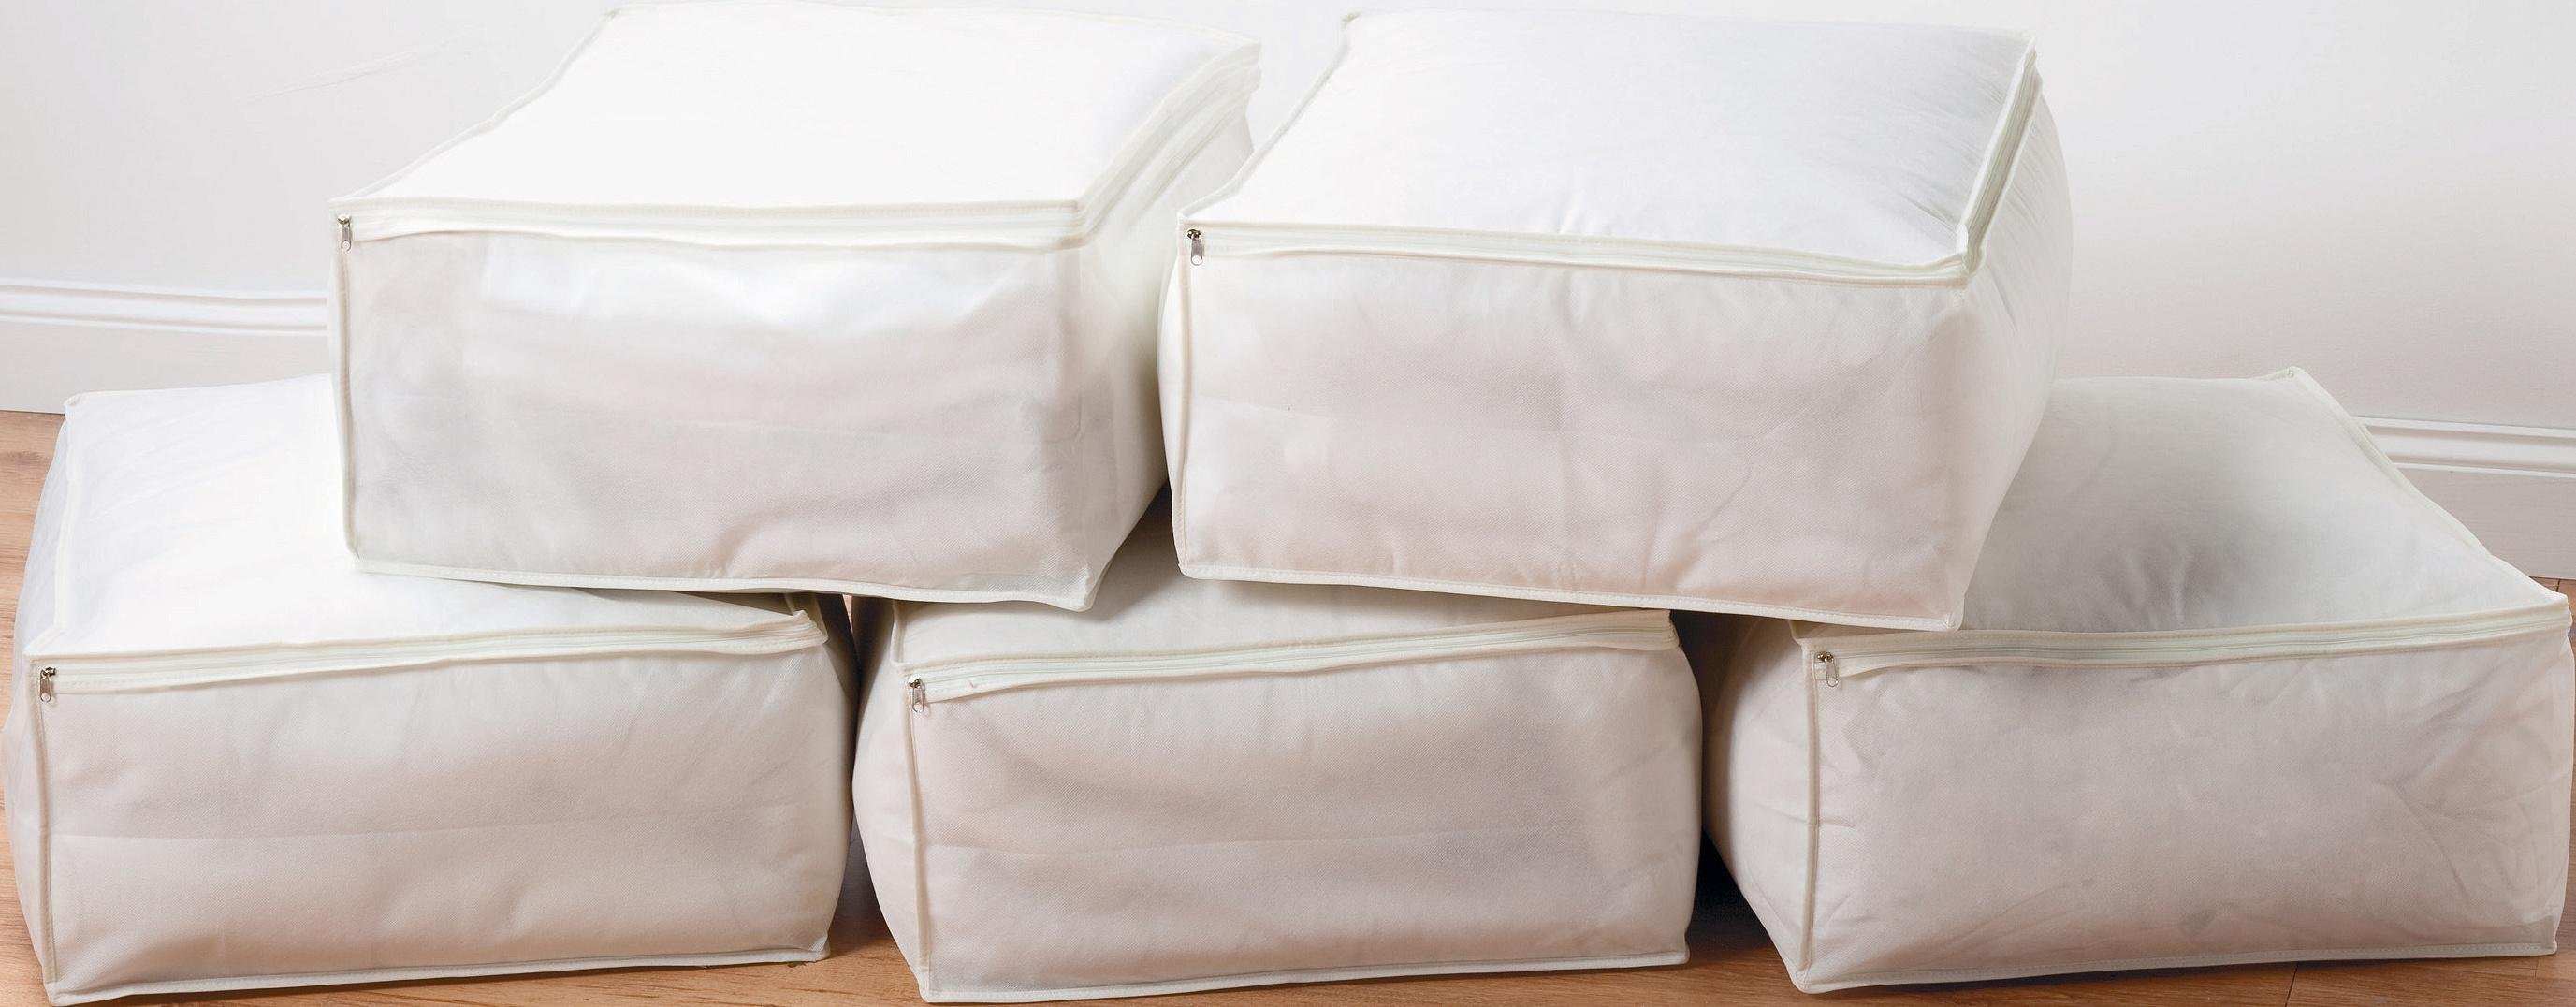 Argos Home Bumper Value Cream Blanket Storage Bags Set of 5